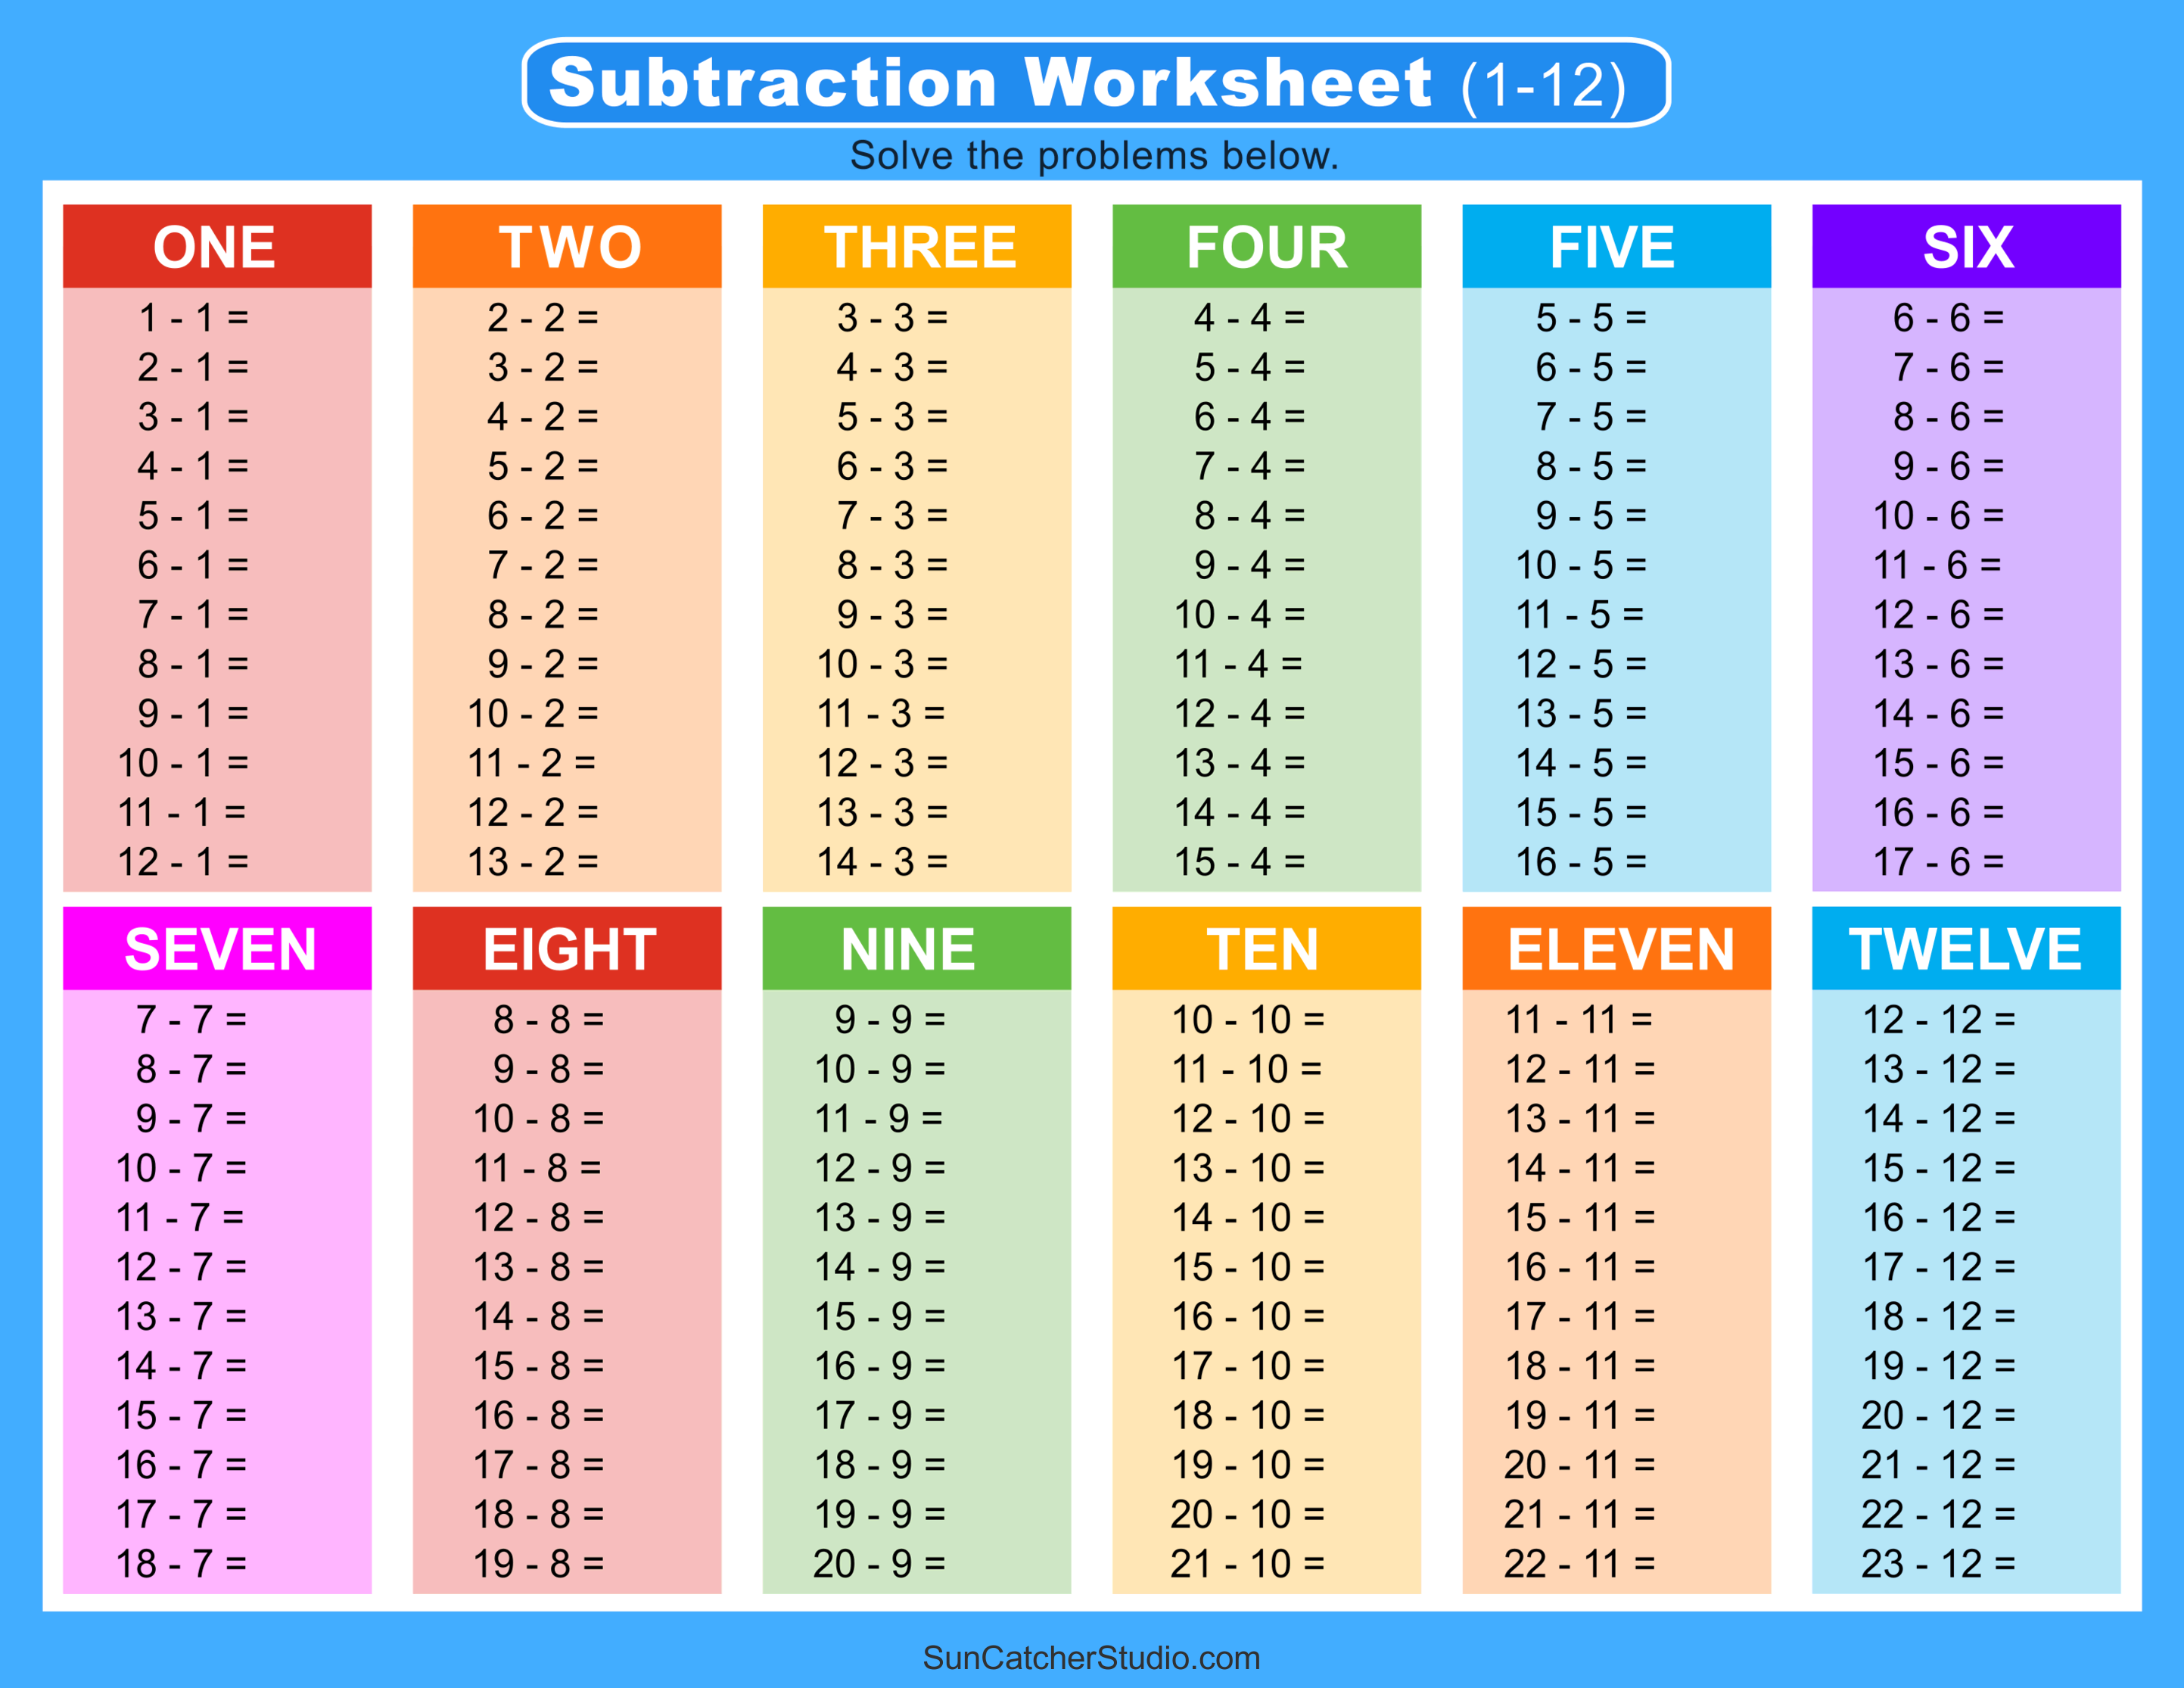 subtraction-tables-worksheets-charts-math-drills-pdf-diy